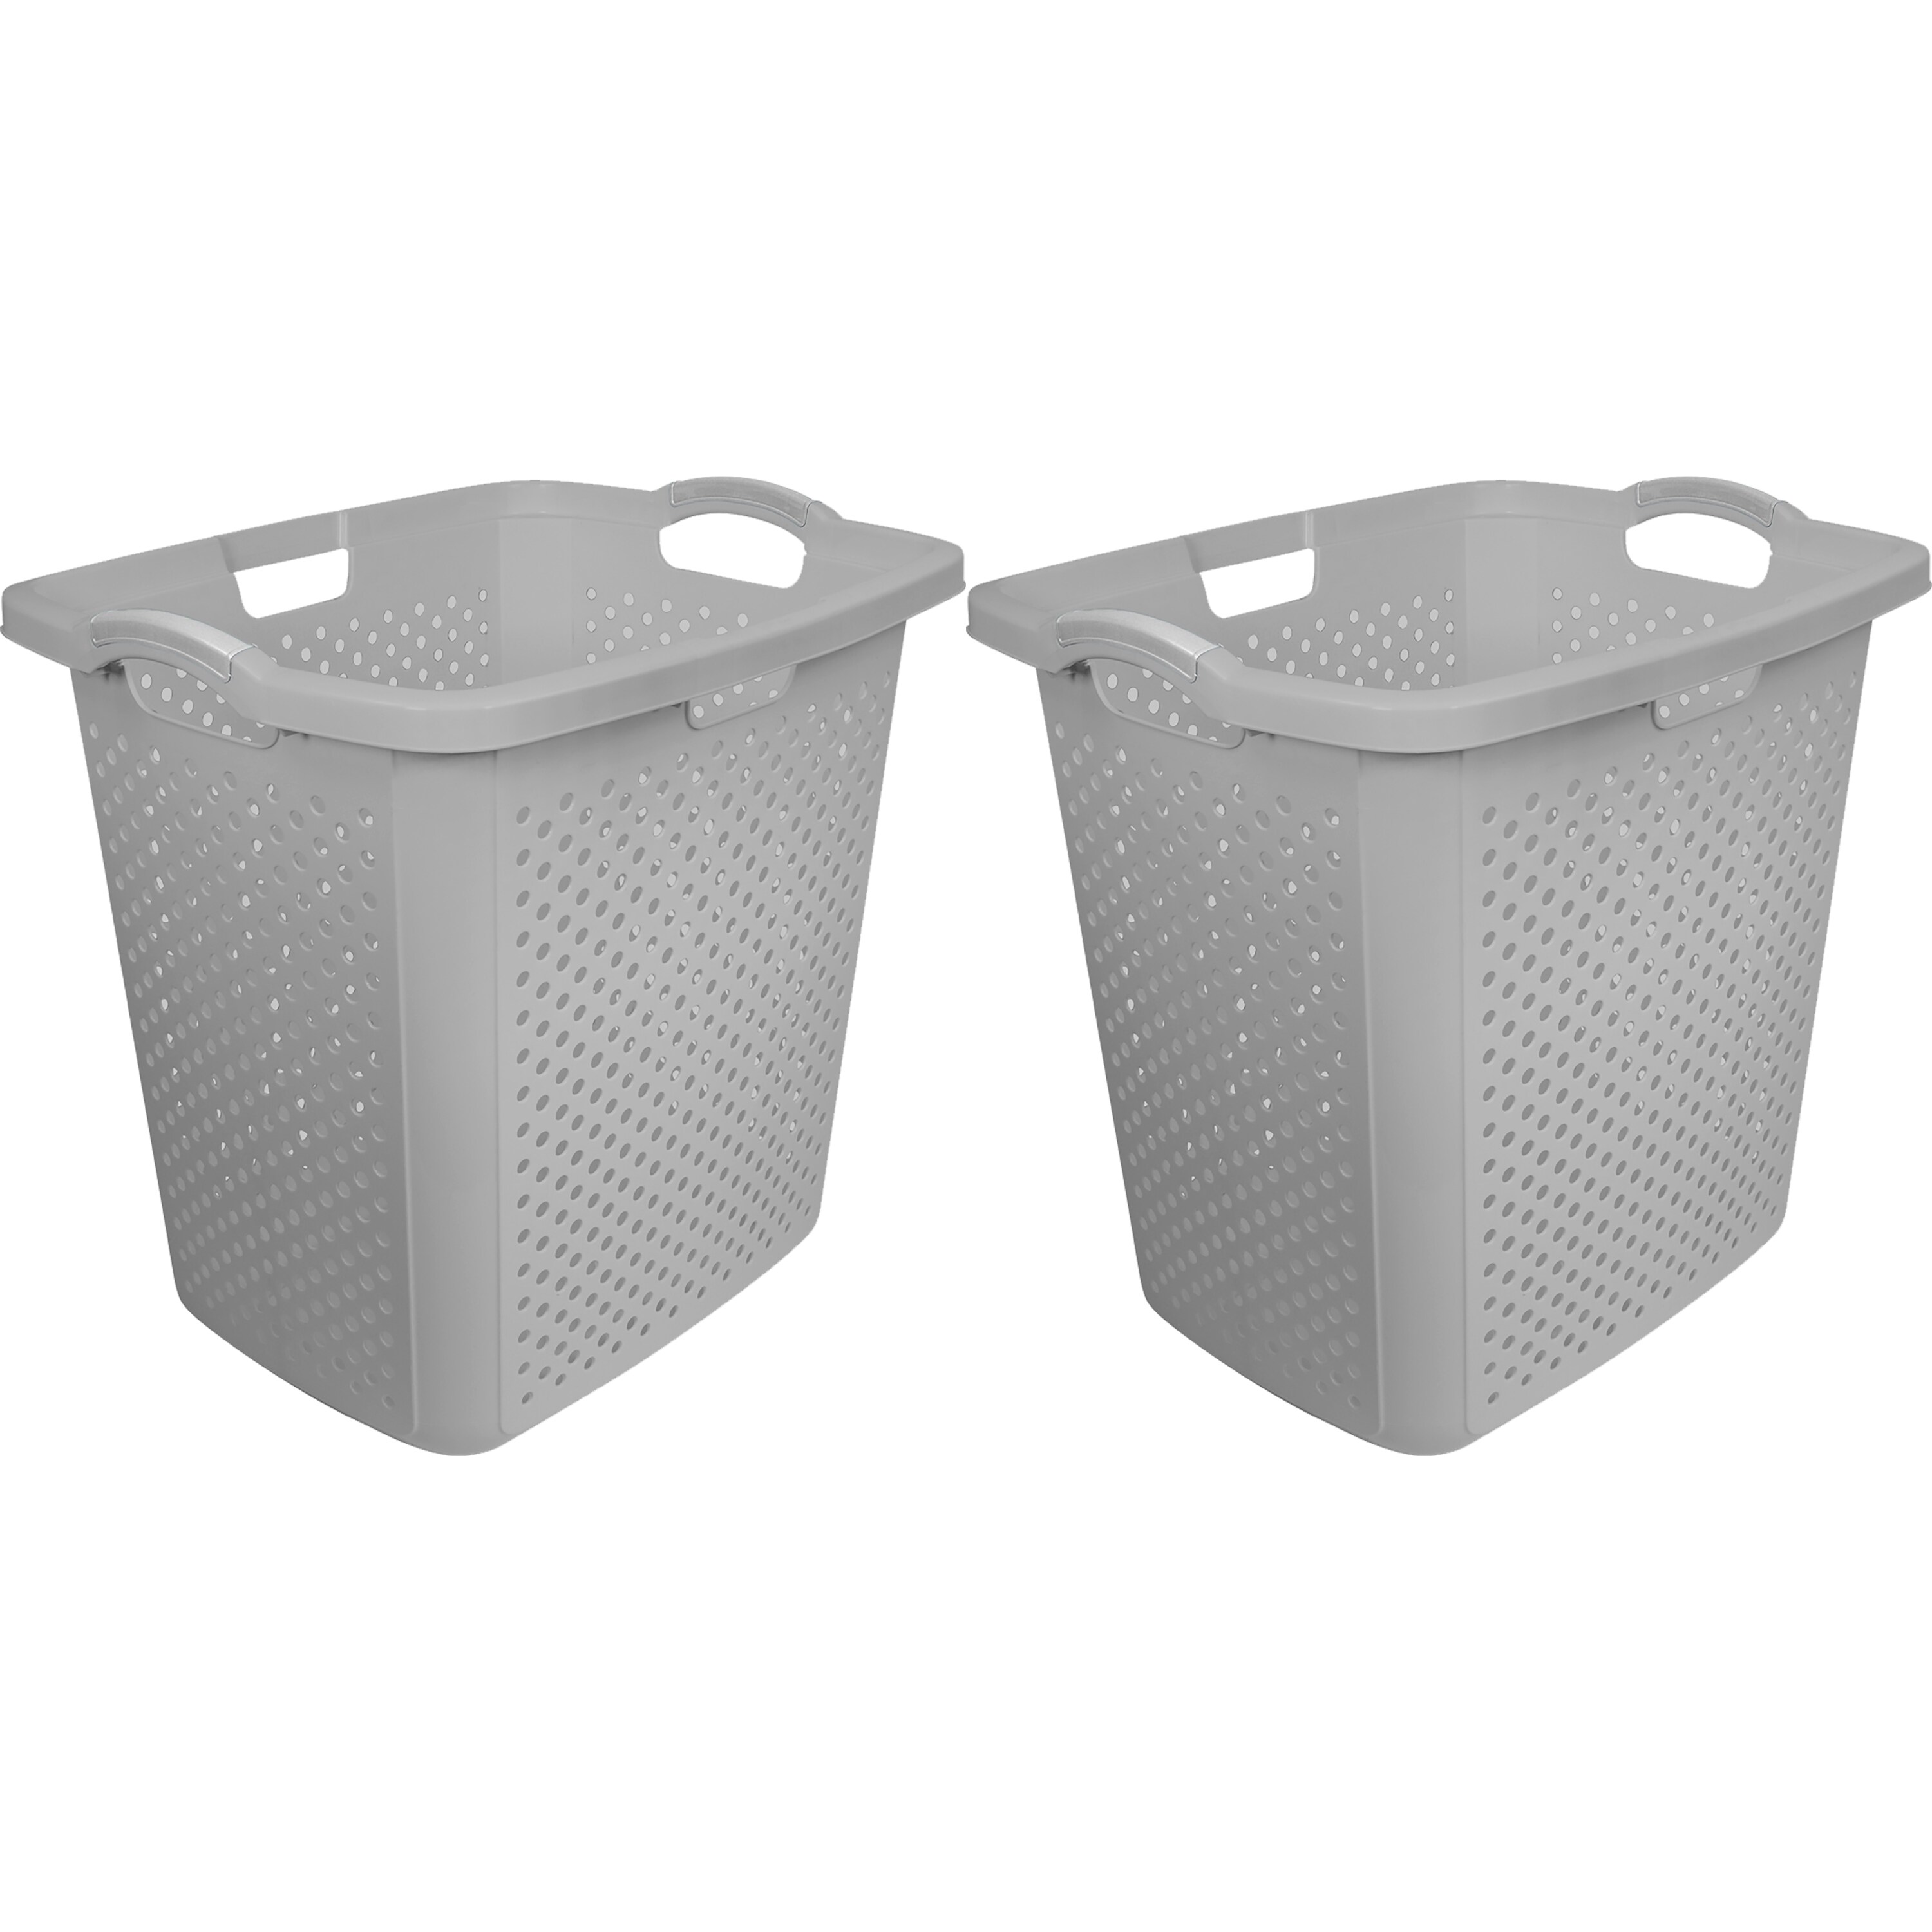 Home Logic 2.5-Bushel Plastic Clothes Hamper Laundry Basket Storage Container 